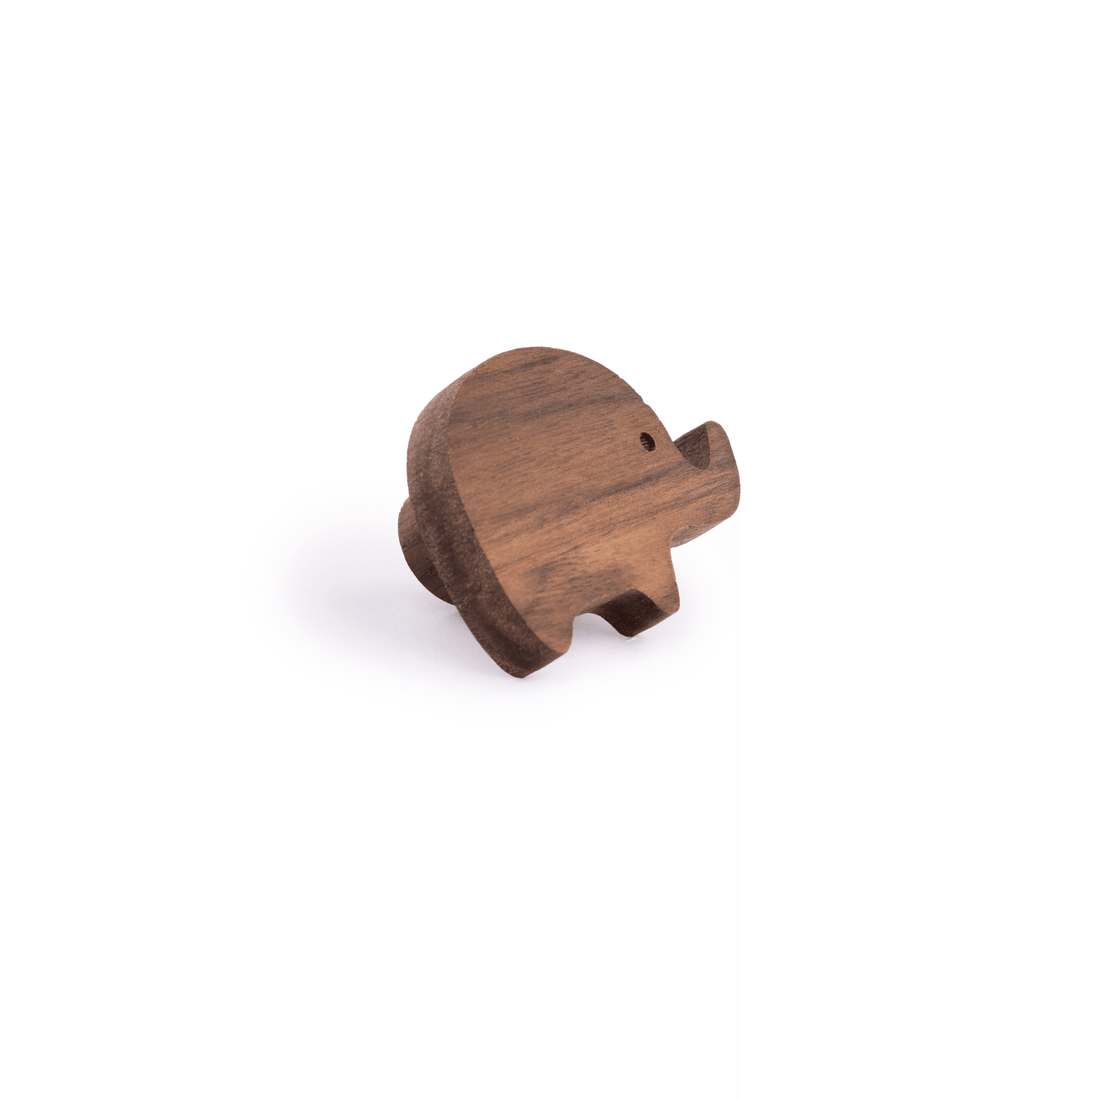 Elephant Wooden Knob Knob 50mm. / Walnut / Wood - M A N T A R A